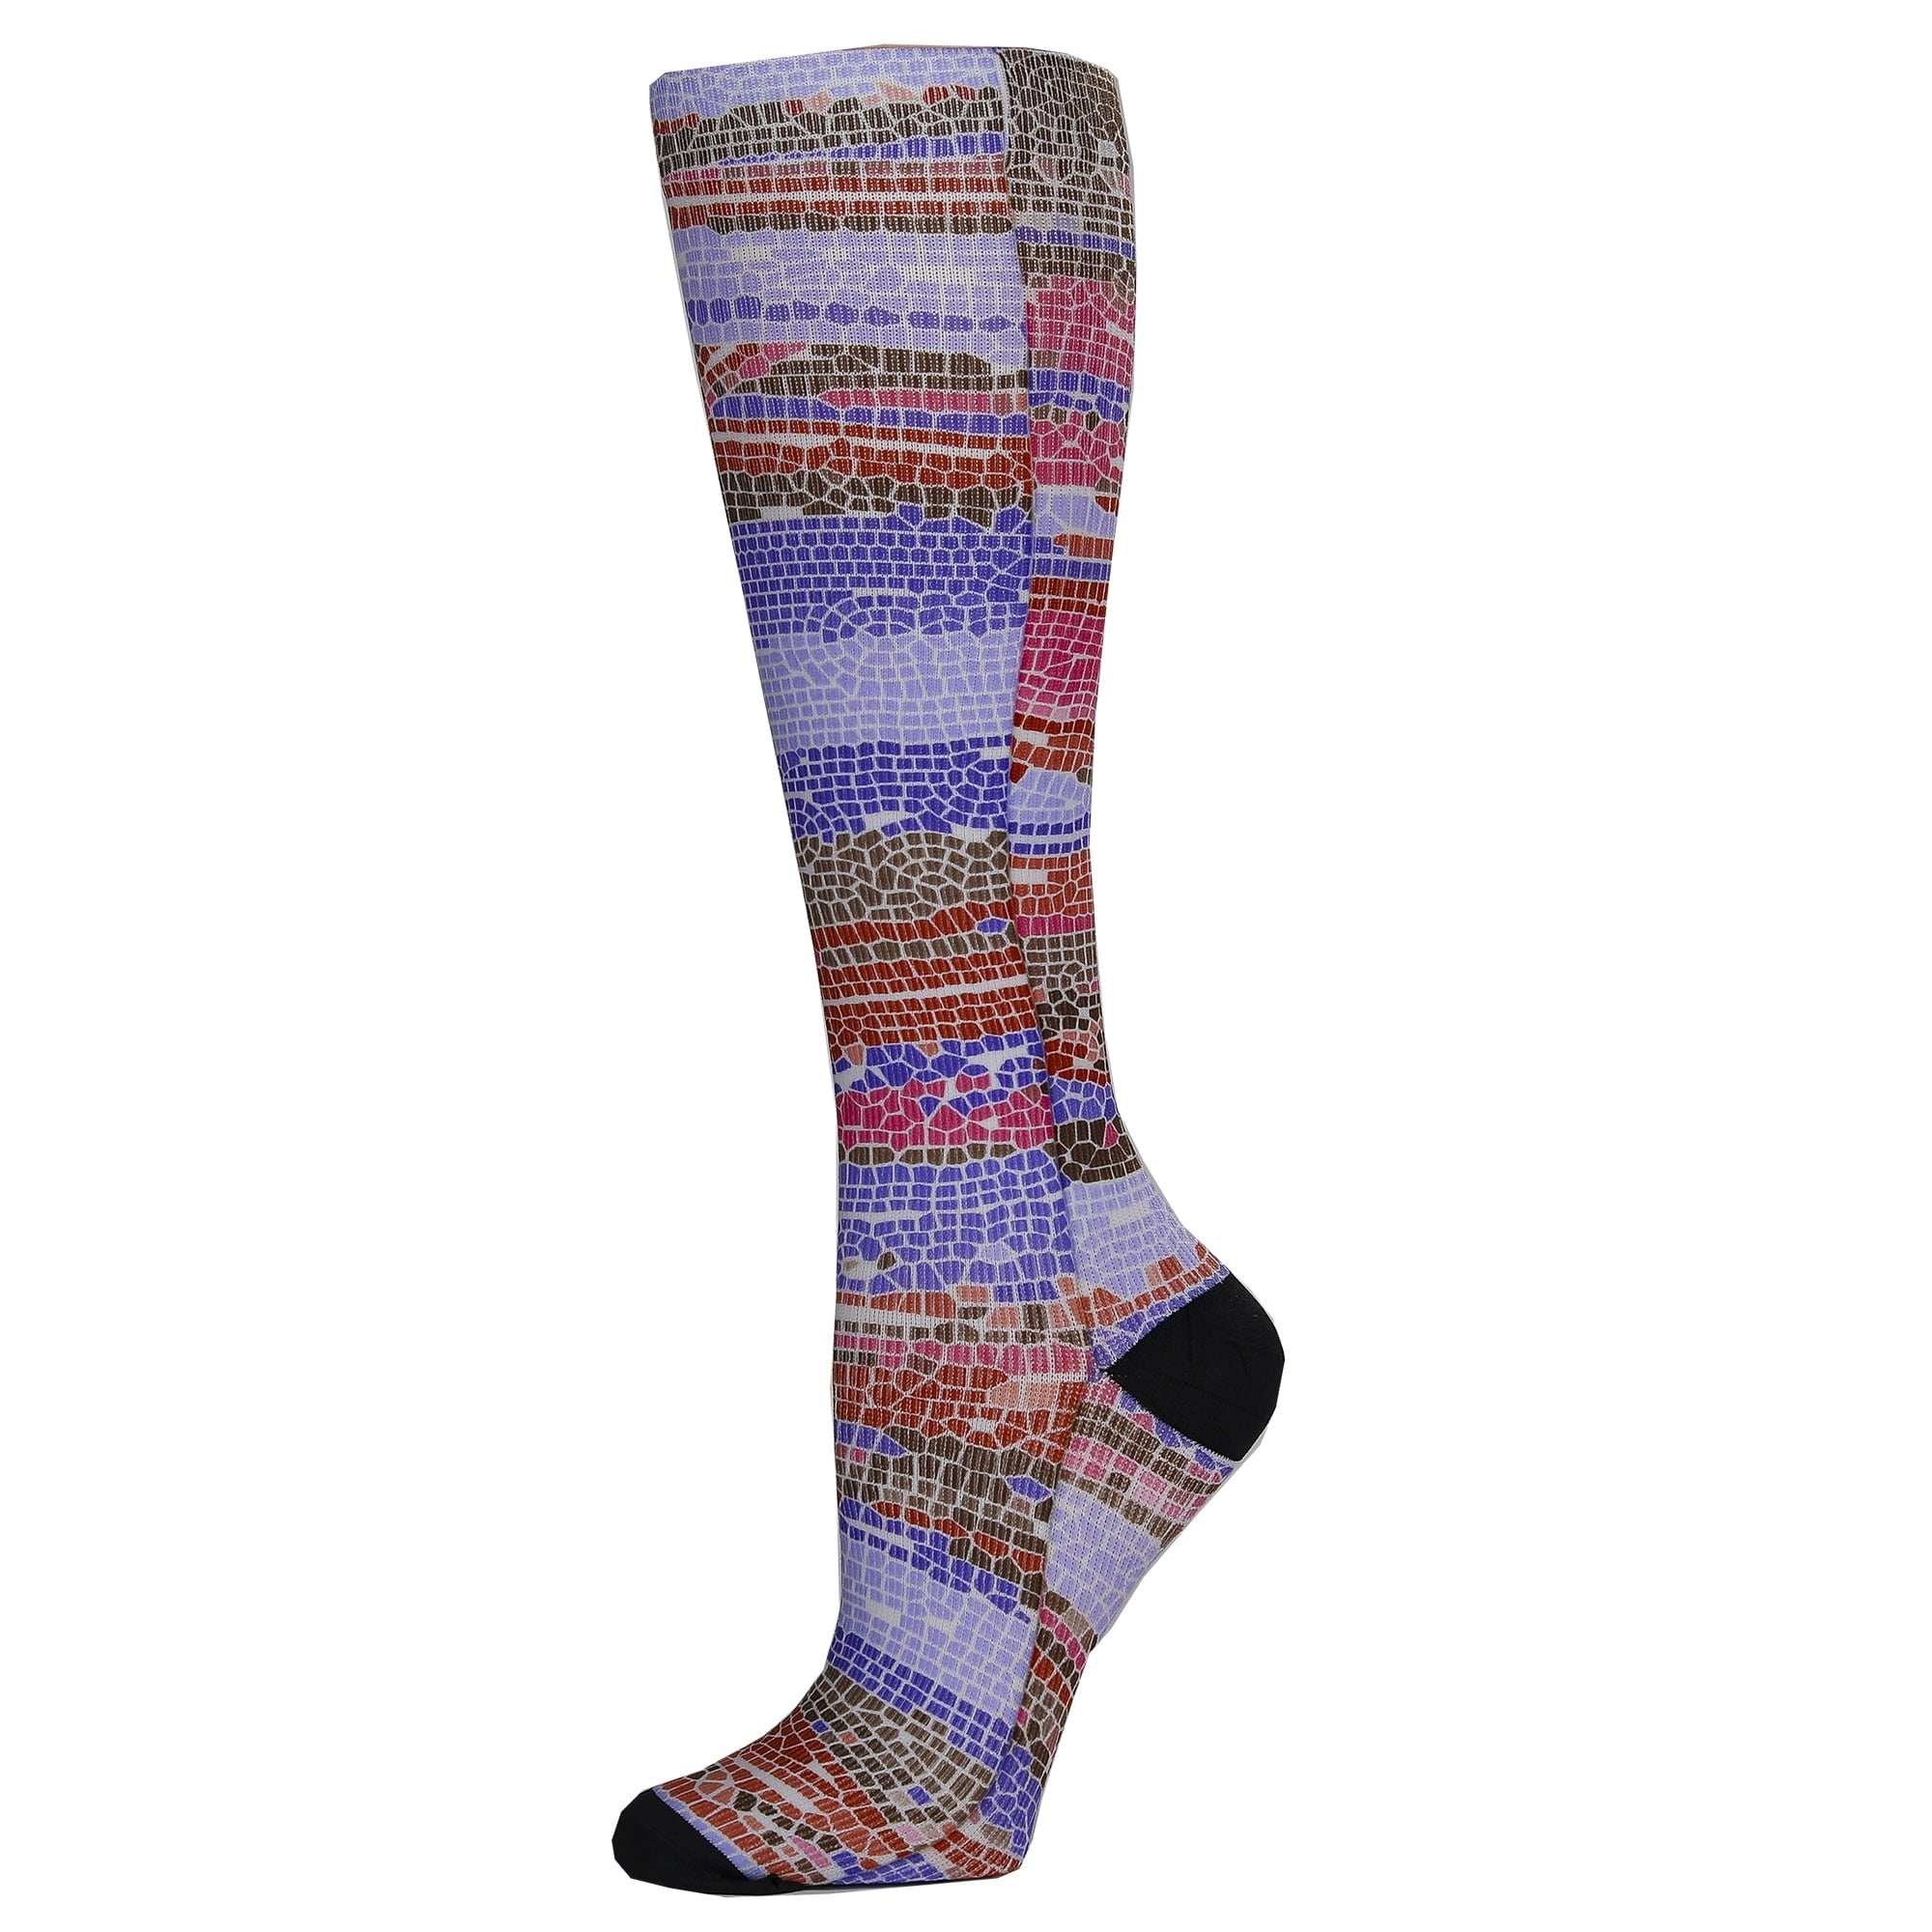 Celeste Stein Graduated Compression Knit Socks, Regular Calf, 8-15mmHg ...